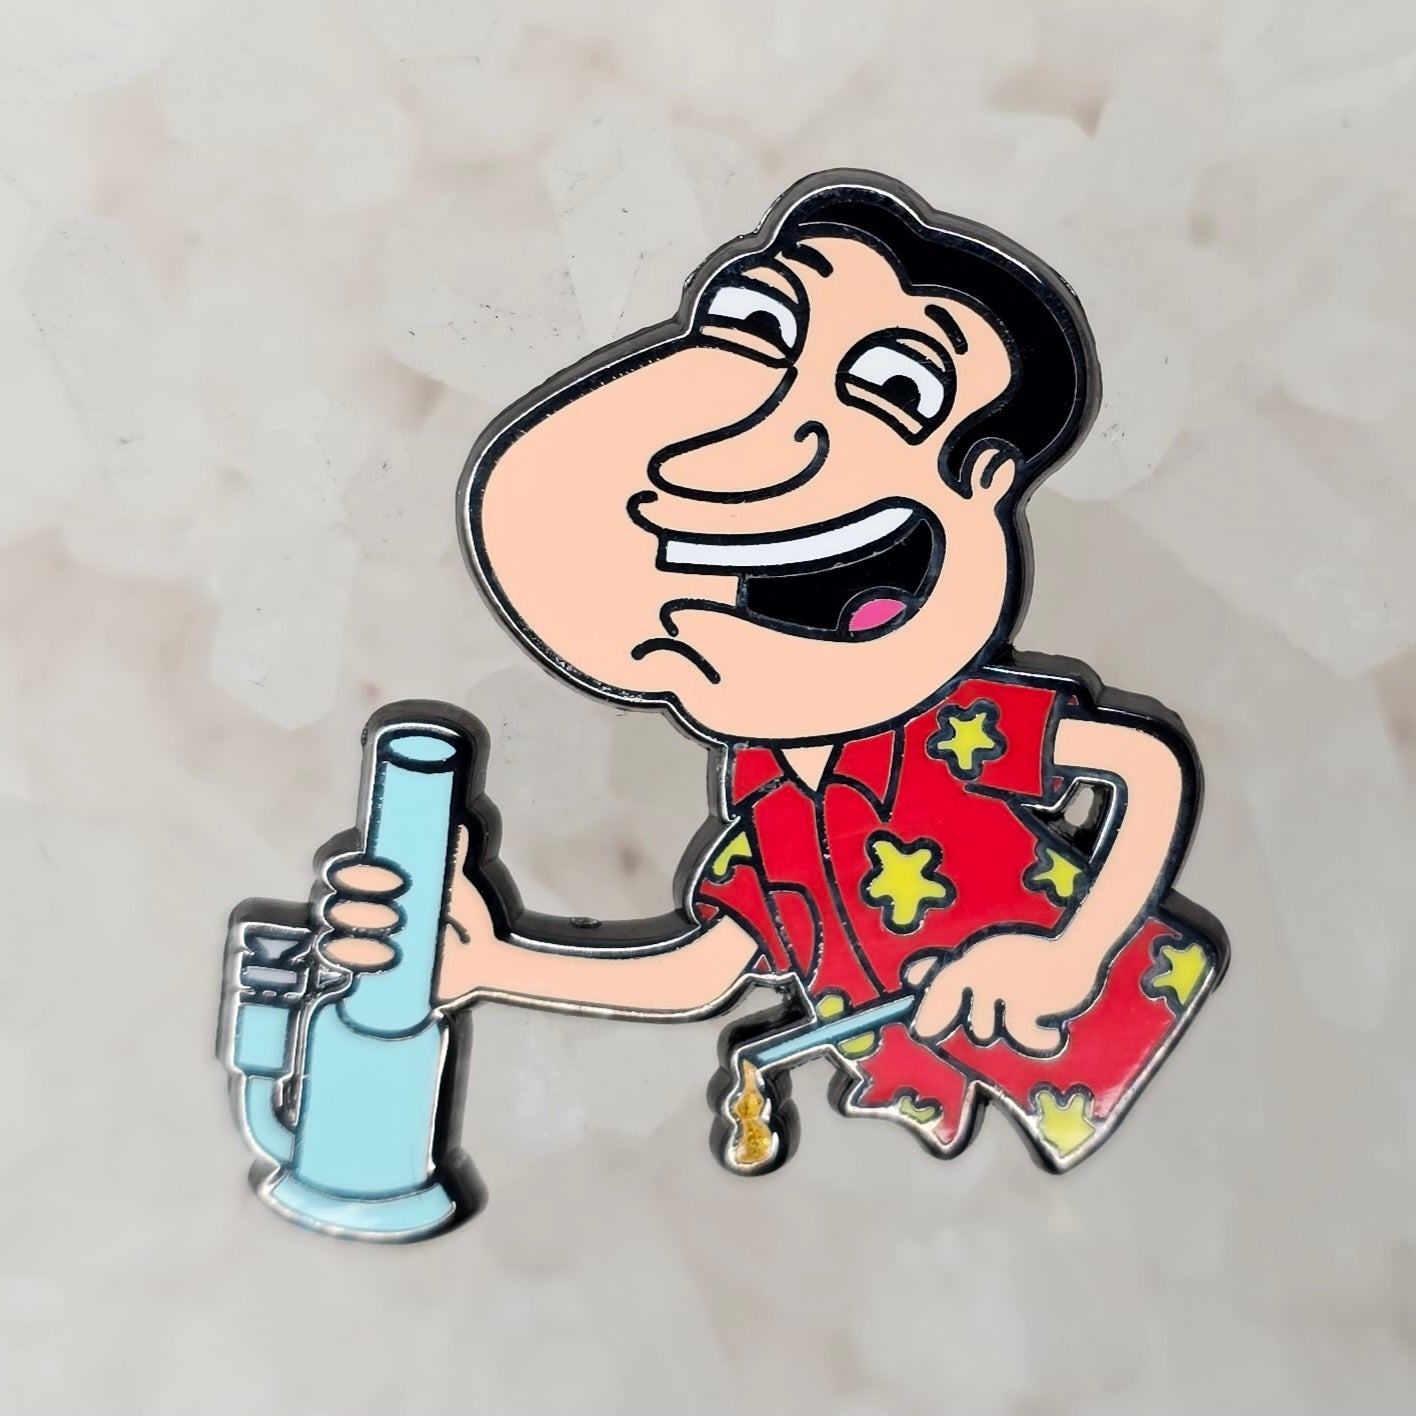 Giggity Dabs Stoner Quagmire Family Cartoon Guy Enamel Pins Hat Pins Lapel Pin Brooch Badge Festival Pin